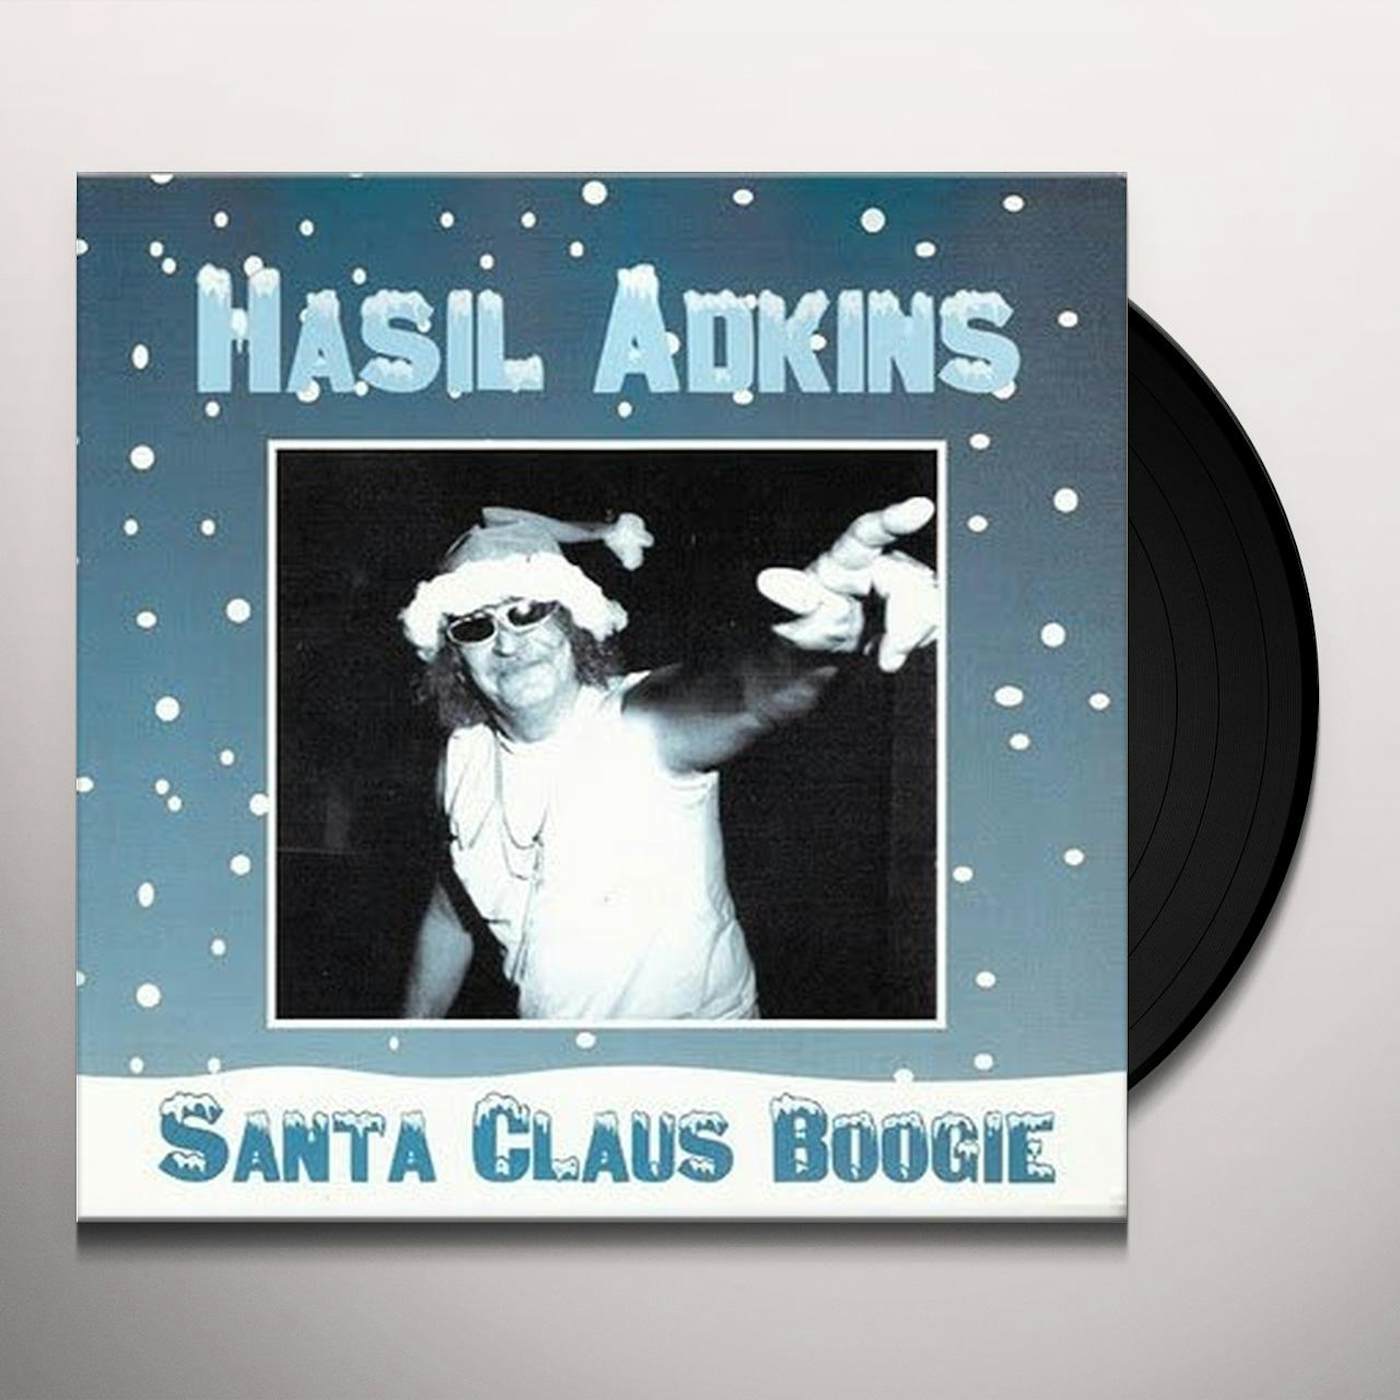 Hasil Adkins SANTA CLAUS BOOGIE Vinyl Record